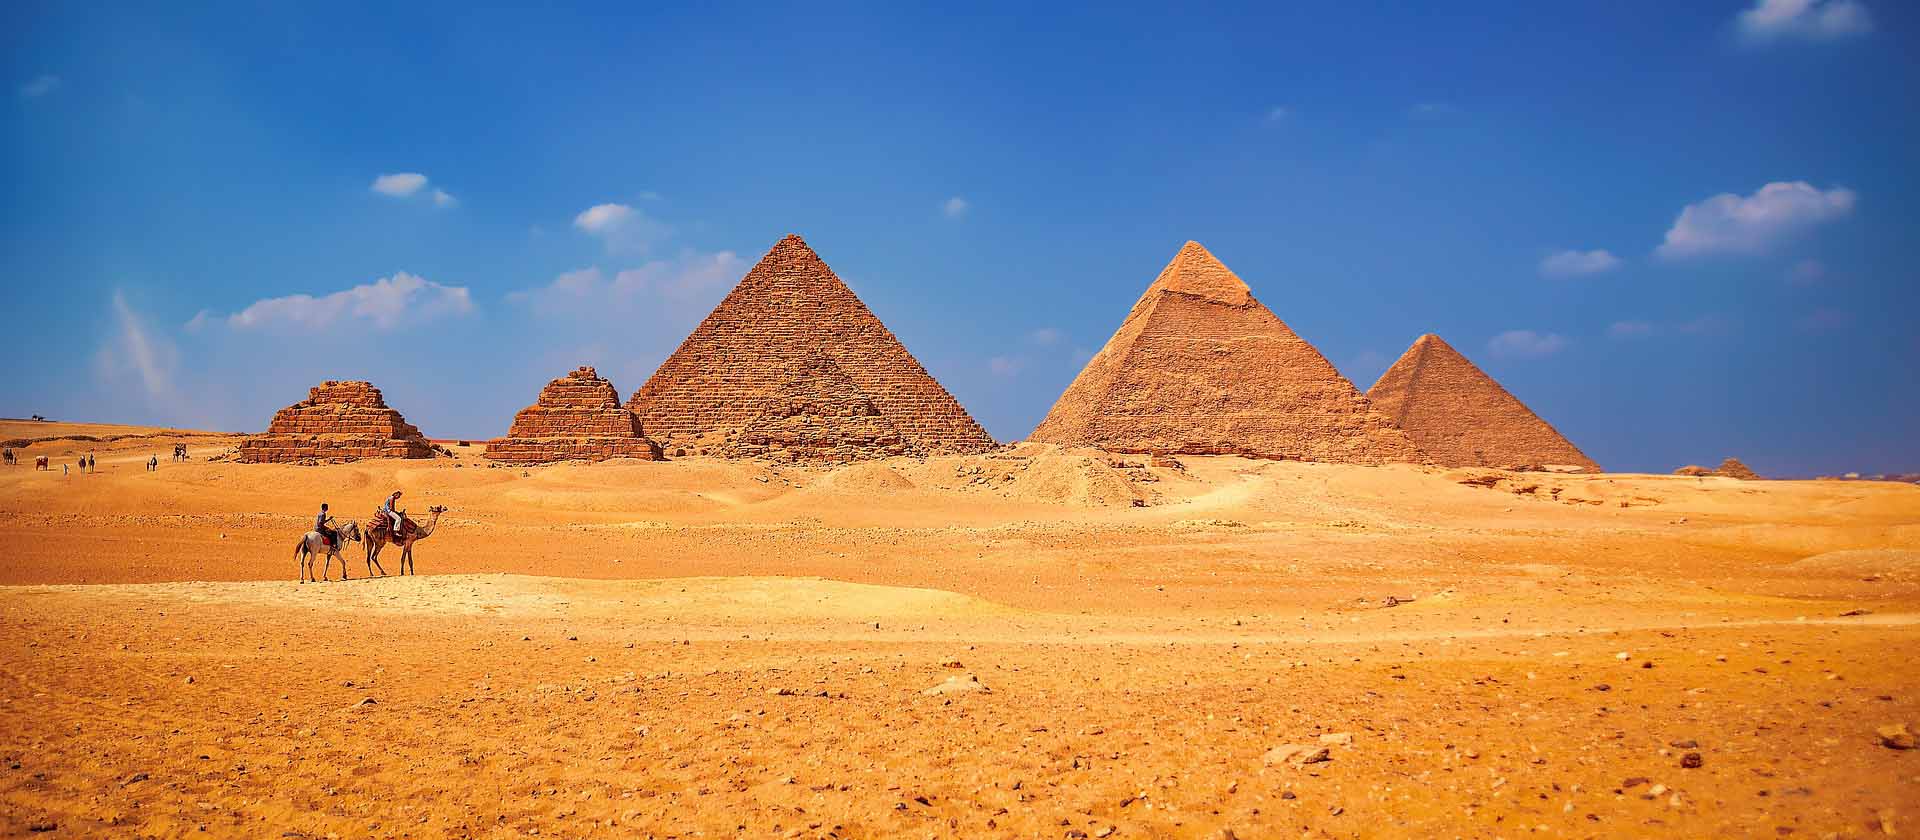 The egyptian pyramids of Giza Cairo